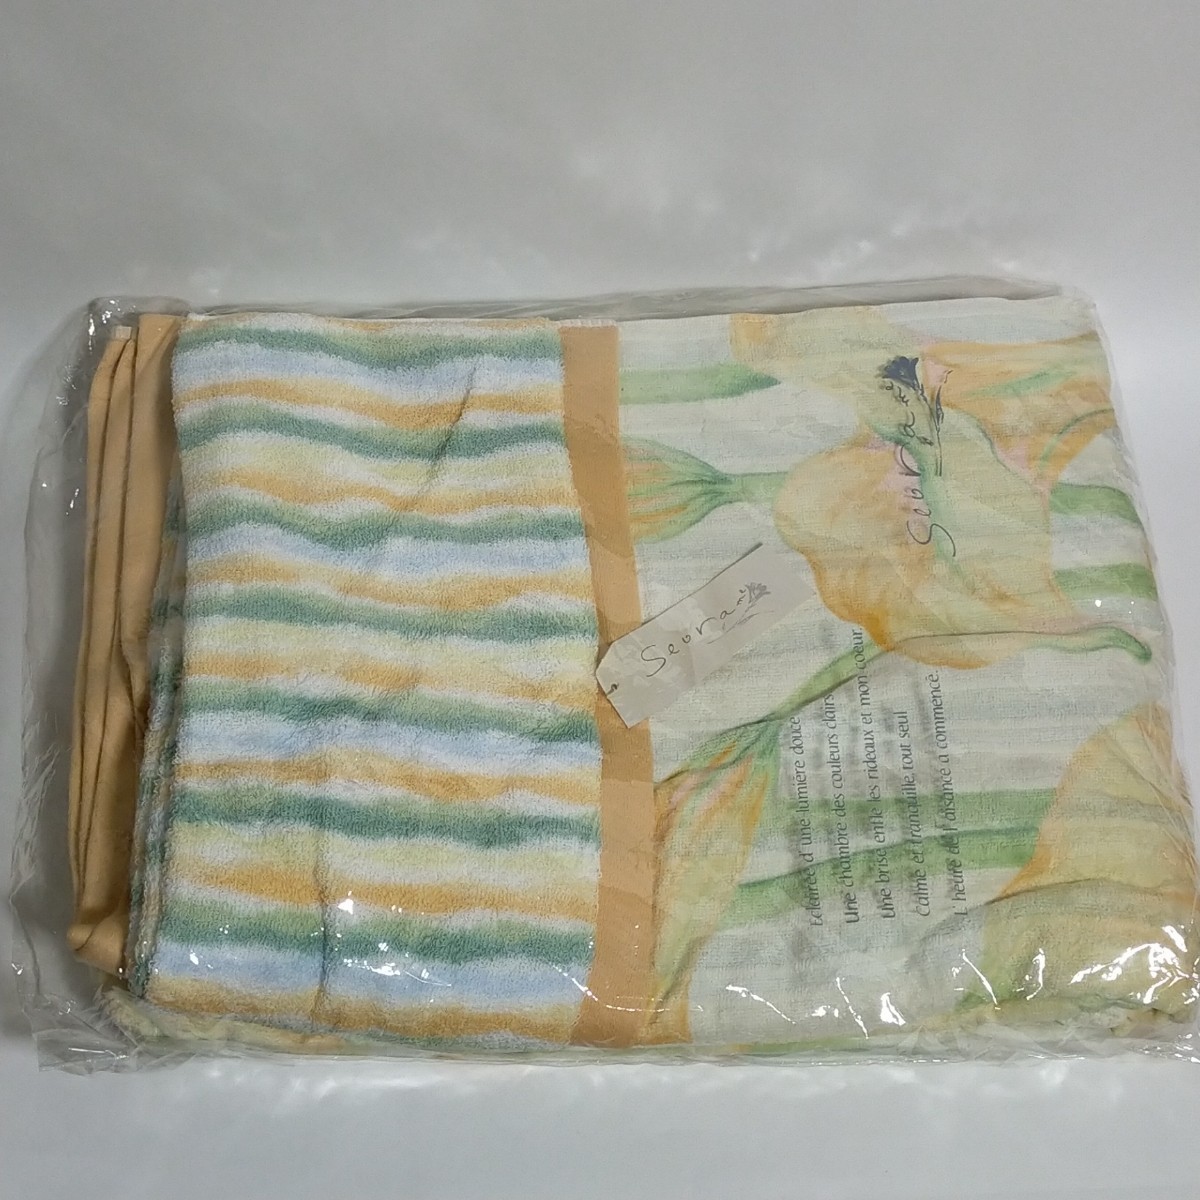  new goods * towelket single Seora me floral print small Japanese cedar commercial firm romance small Japanese cedar bedding towel summer quilt *343